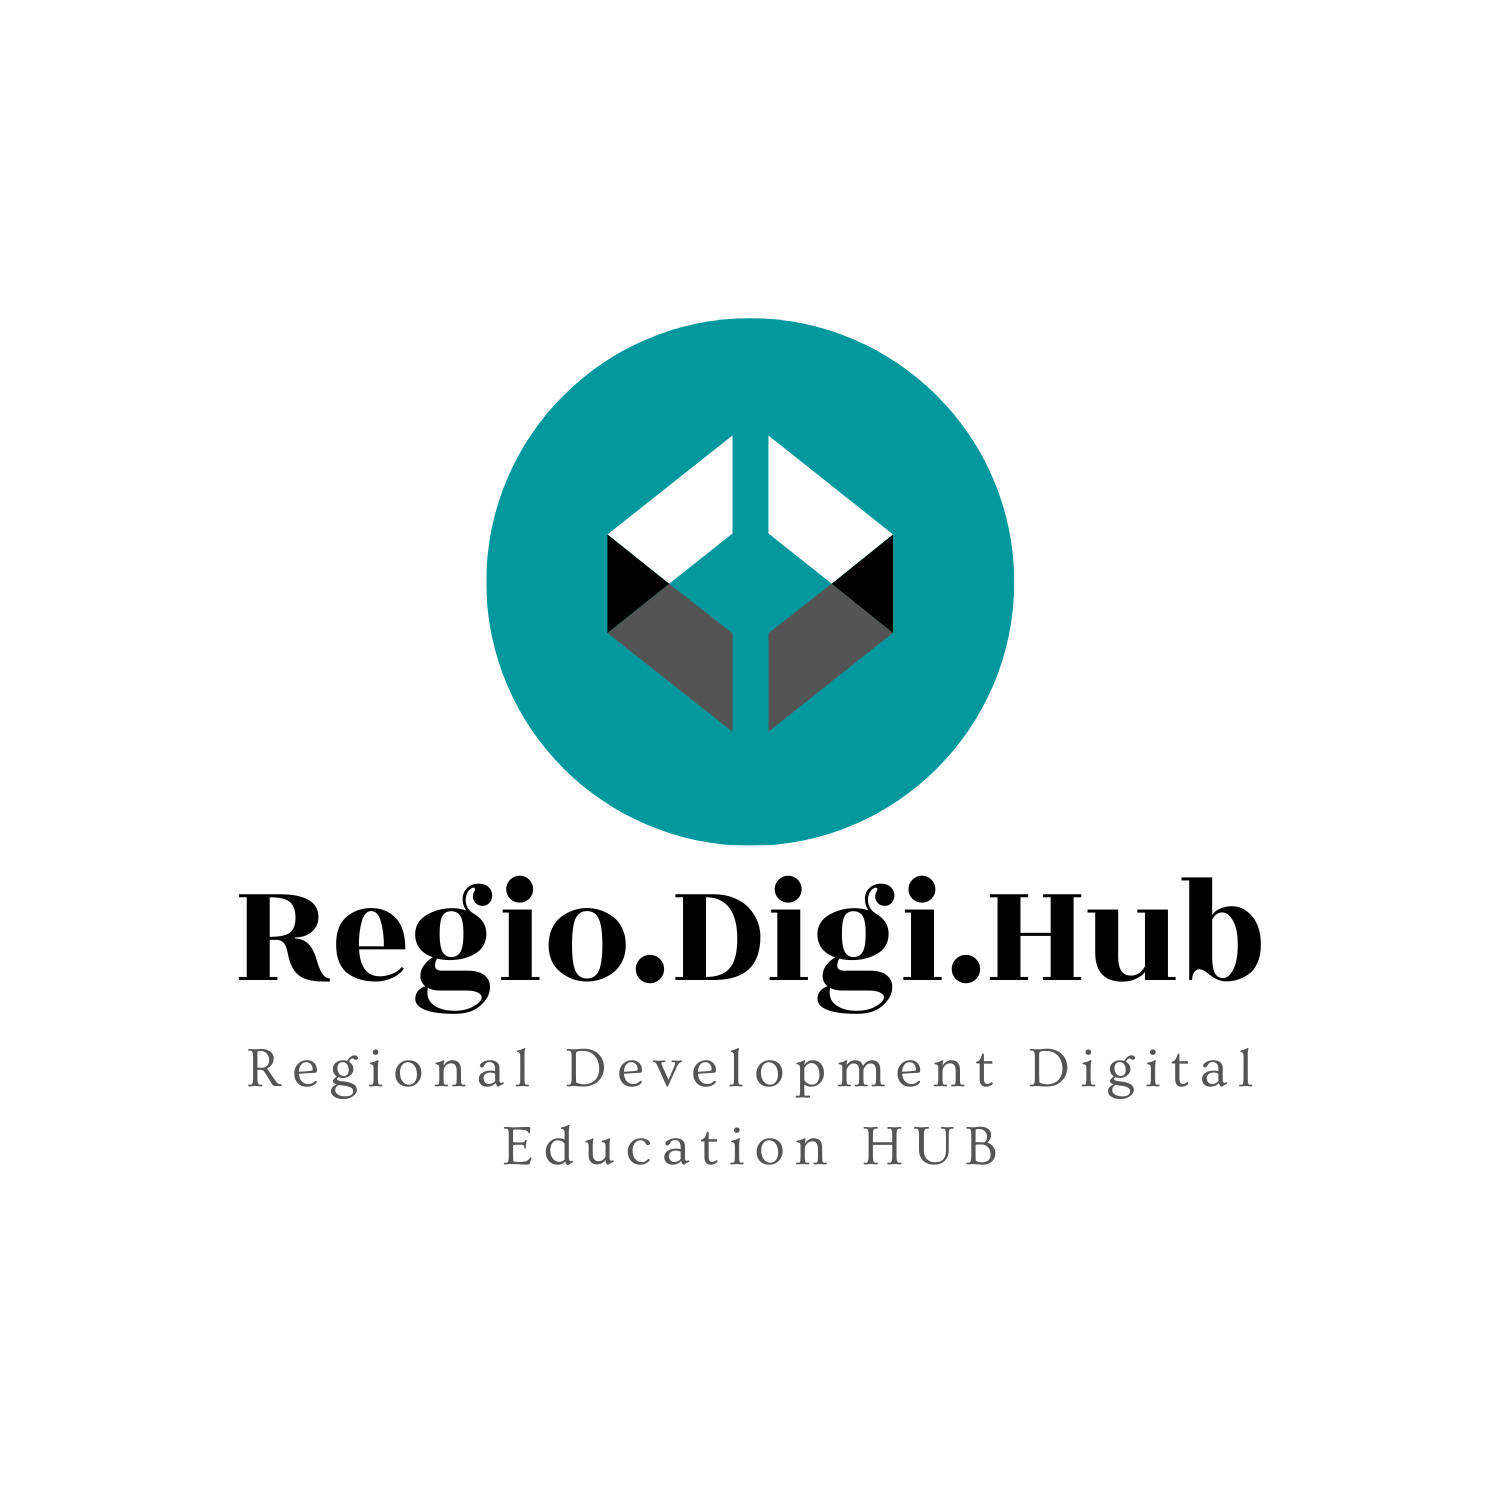 Regio.Digi.Hub Regional Development Digital Education HUB